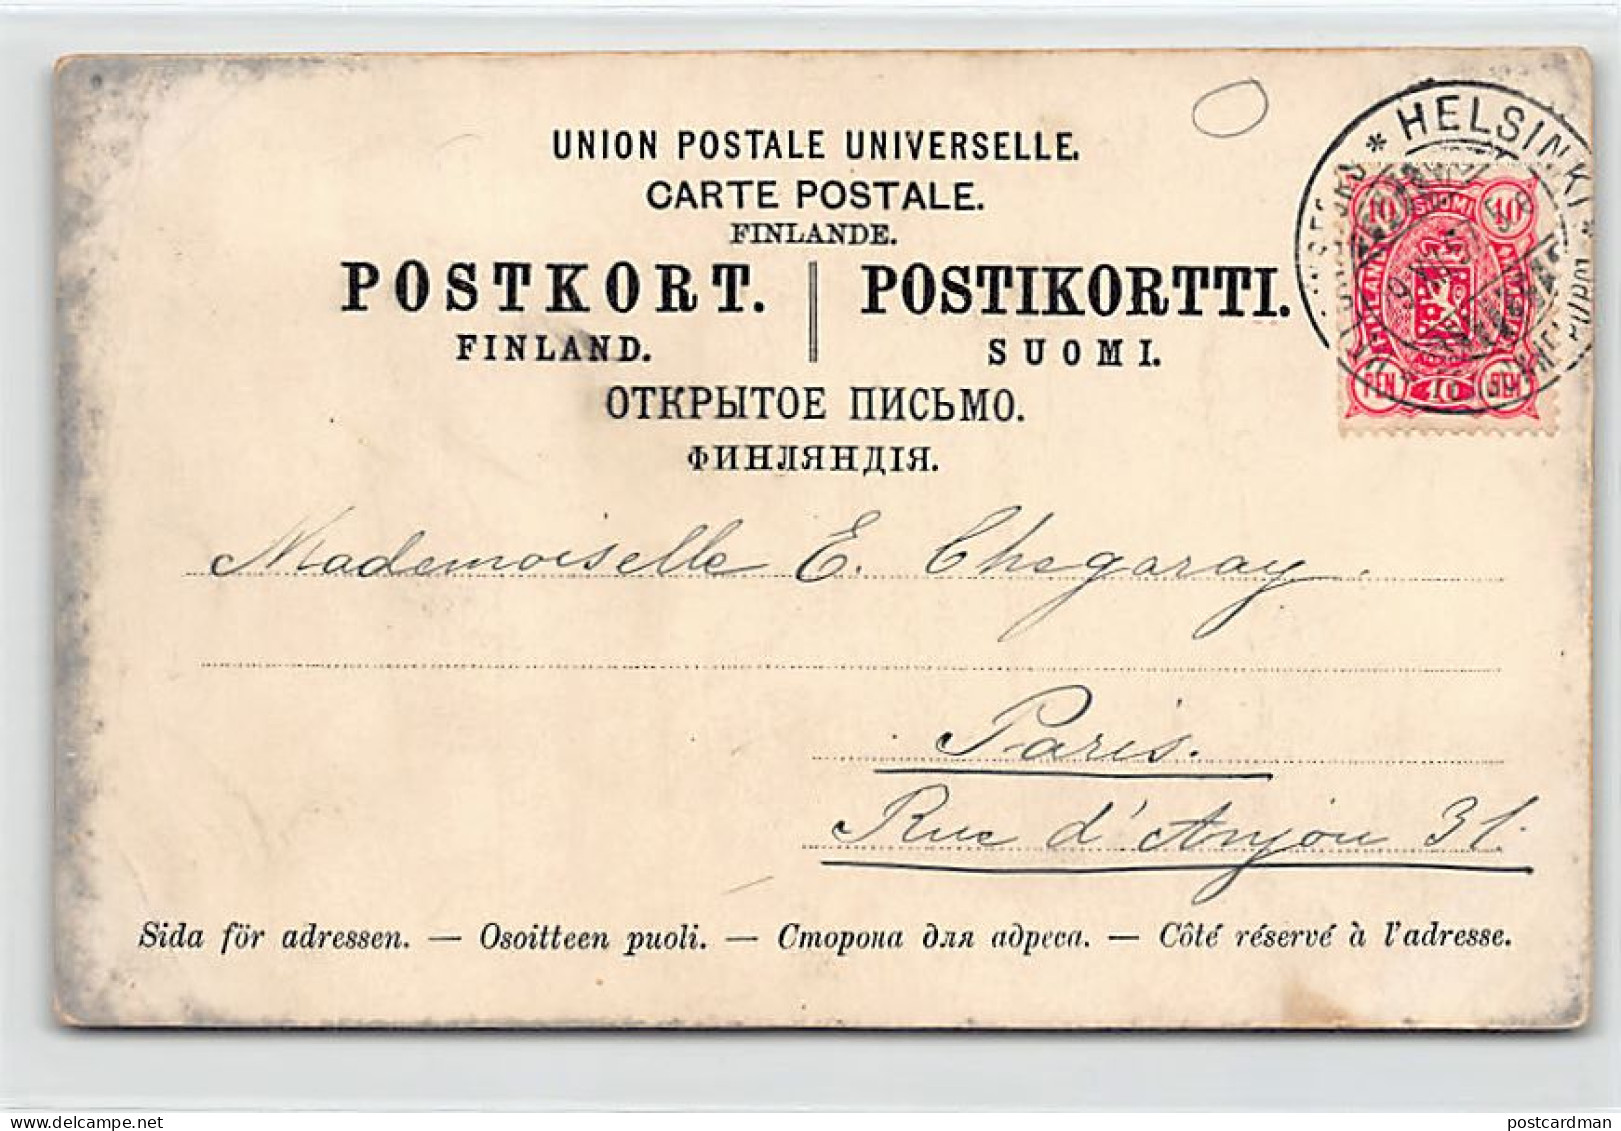 Finland - HELSINKI - Litho Postcard - YEAR 1897 - Publ. F. Tilgmann  - Finlande